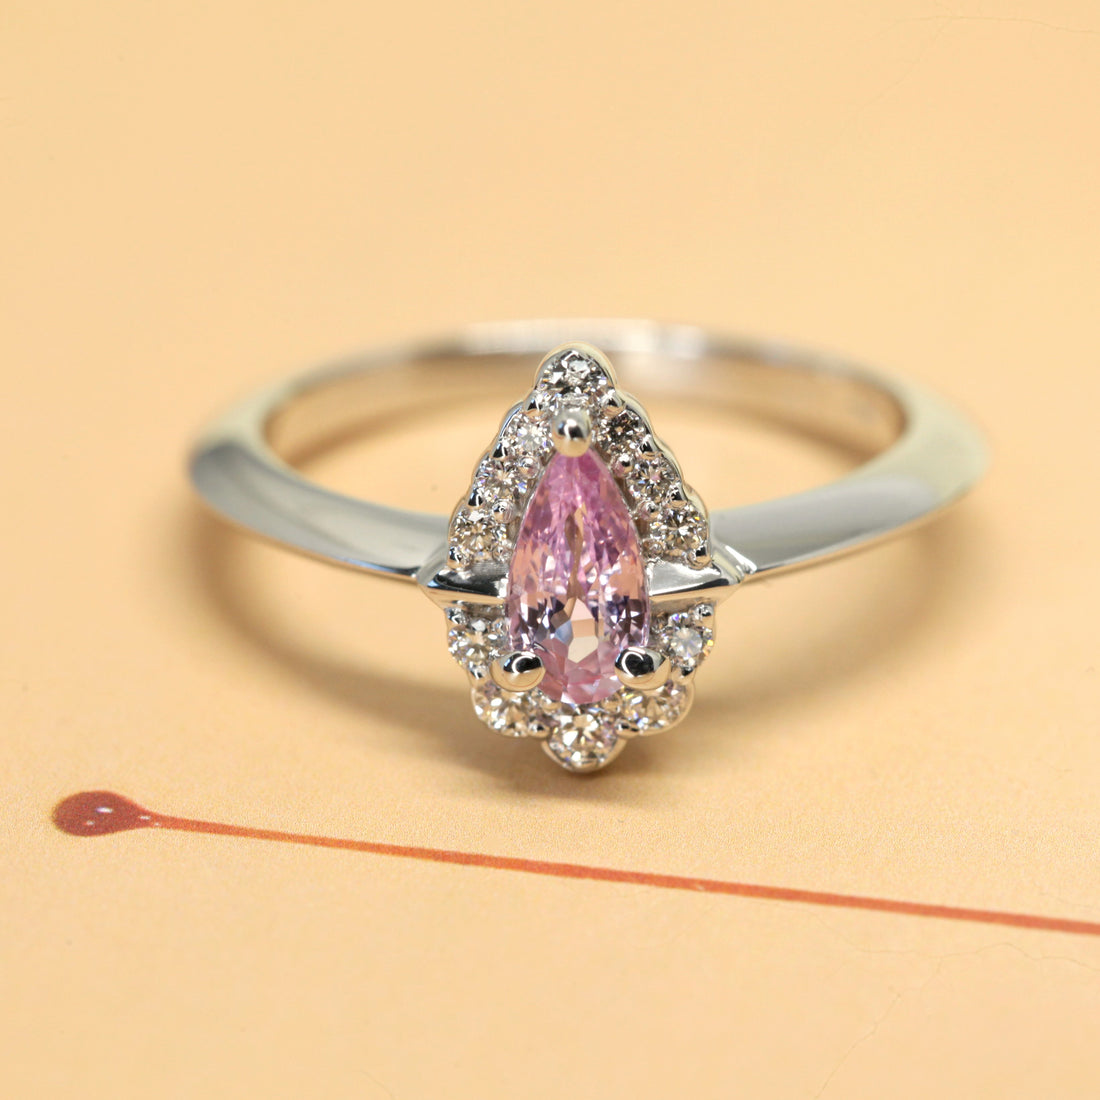 Bena Jewelry Montreal Custom Color Gemstone Engagement Ring Handmade in montreal pink sapphire bridal diamond ring custom made jewelry montreal bena jewelry edgy fine minimalist jewelry